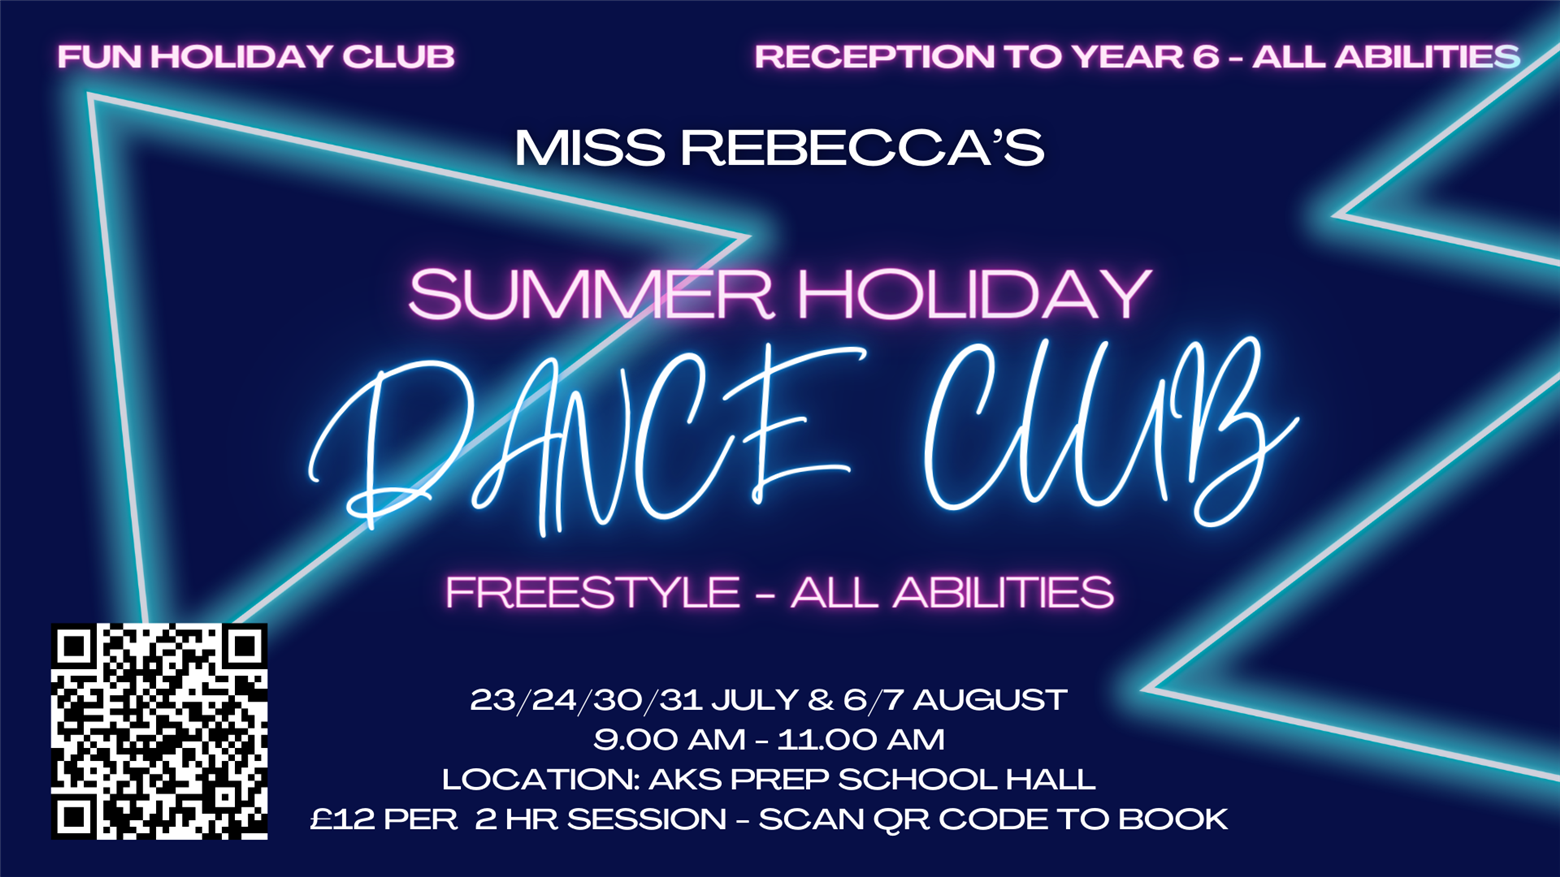 Miss Rebecca's Summer Holiday Dance Club